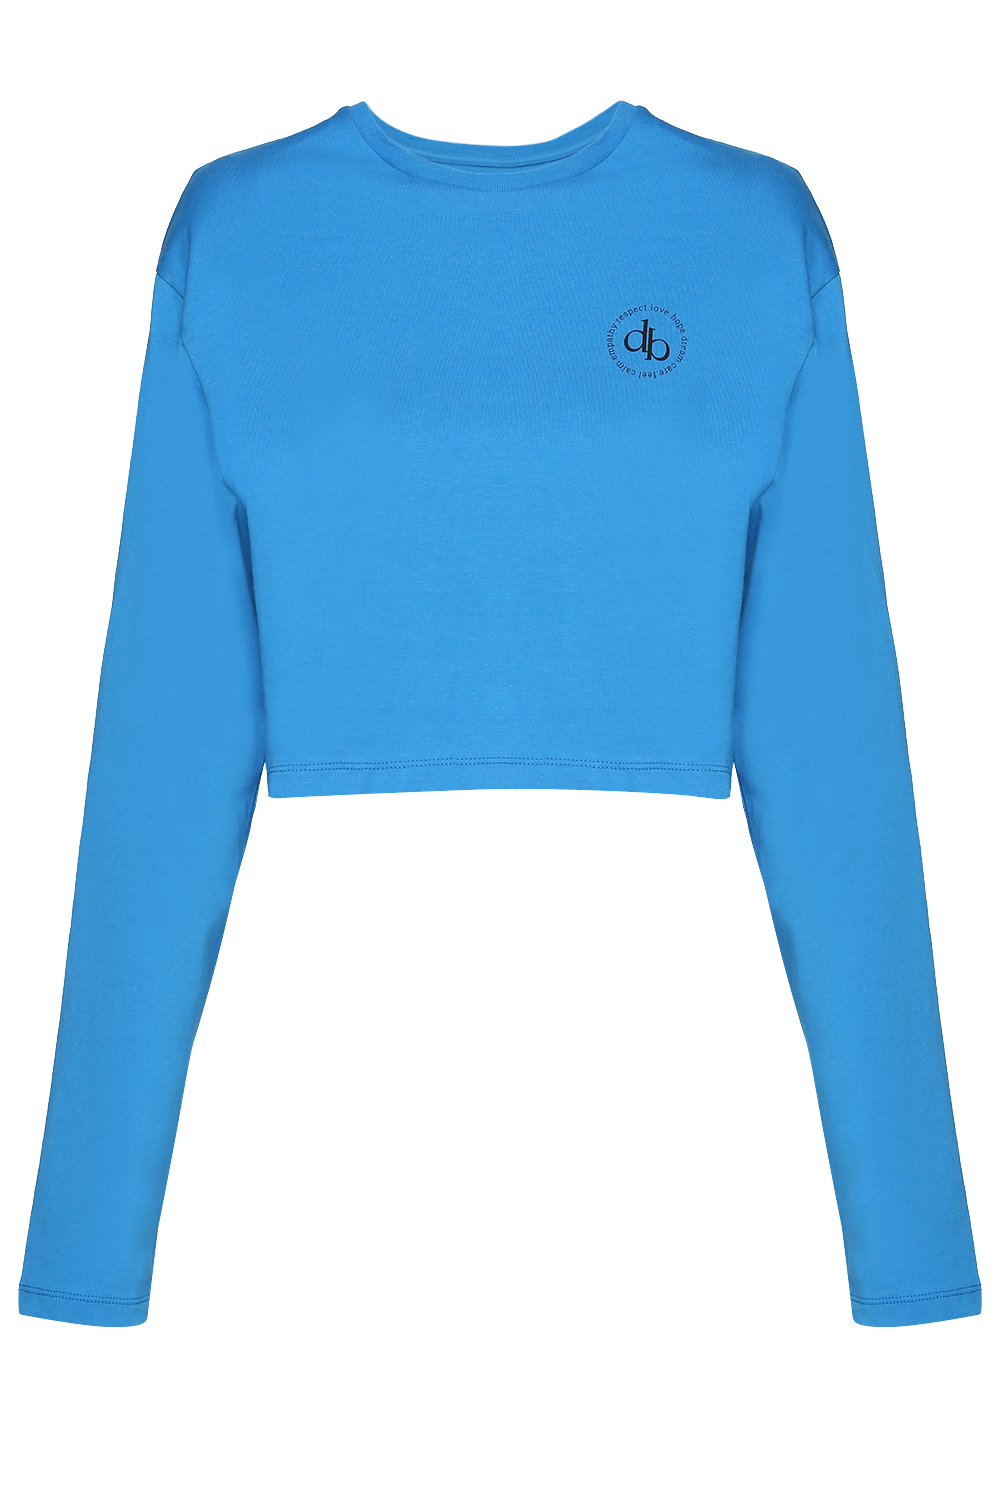 Dahlia Bianca | Long Sleeve Cropped T-shirt - Dark Blue - Tshirt